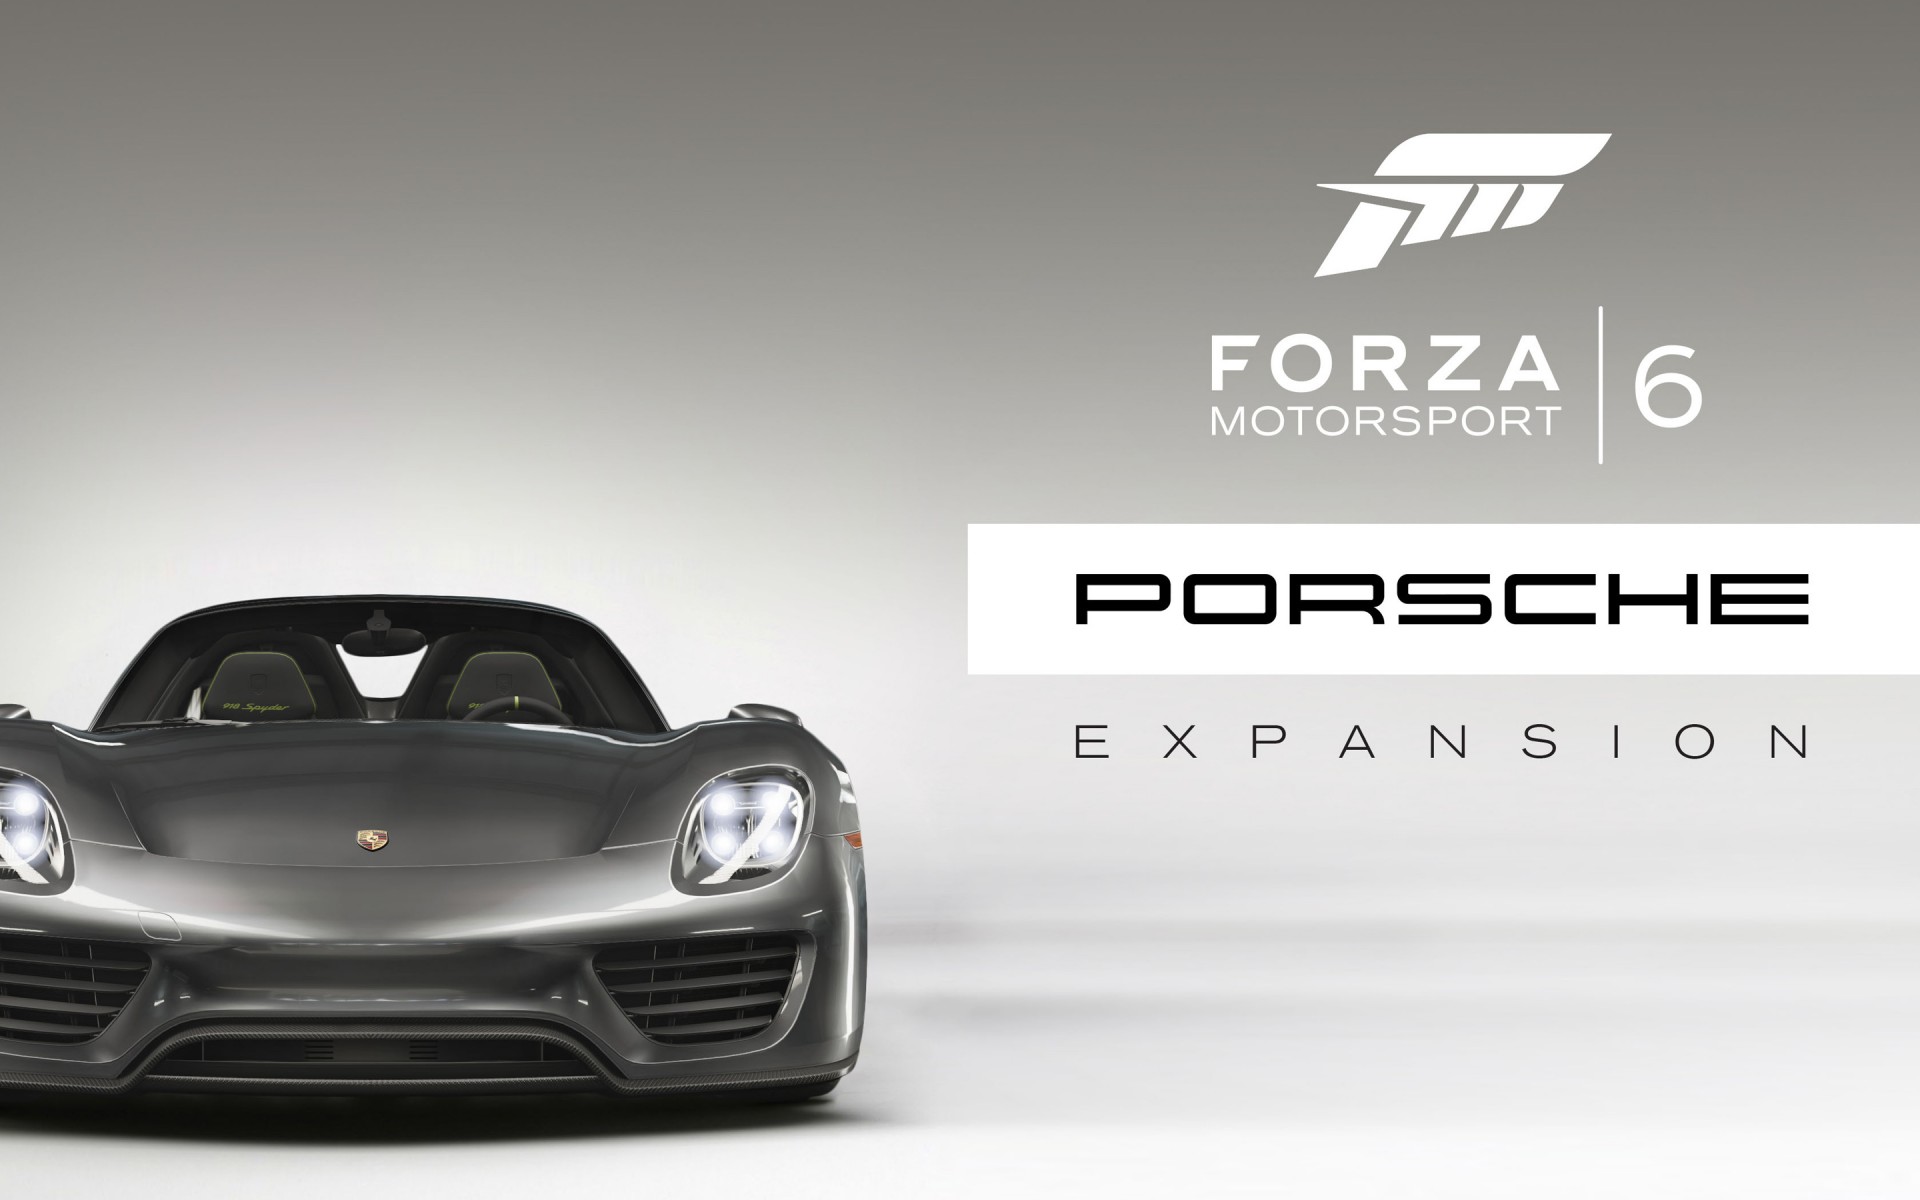 Картинки Porsche, Forza, Motorsport, Expansion фото и обои на рабочий стол